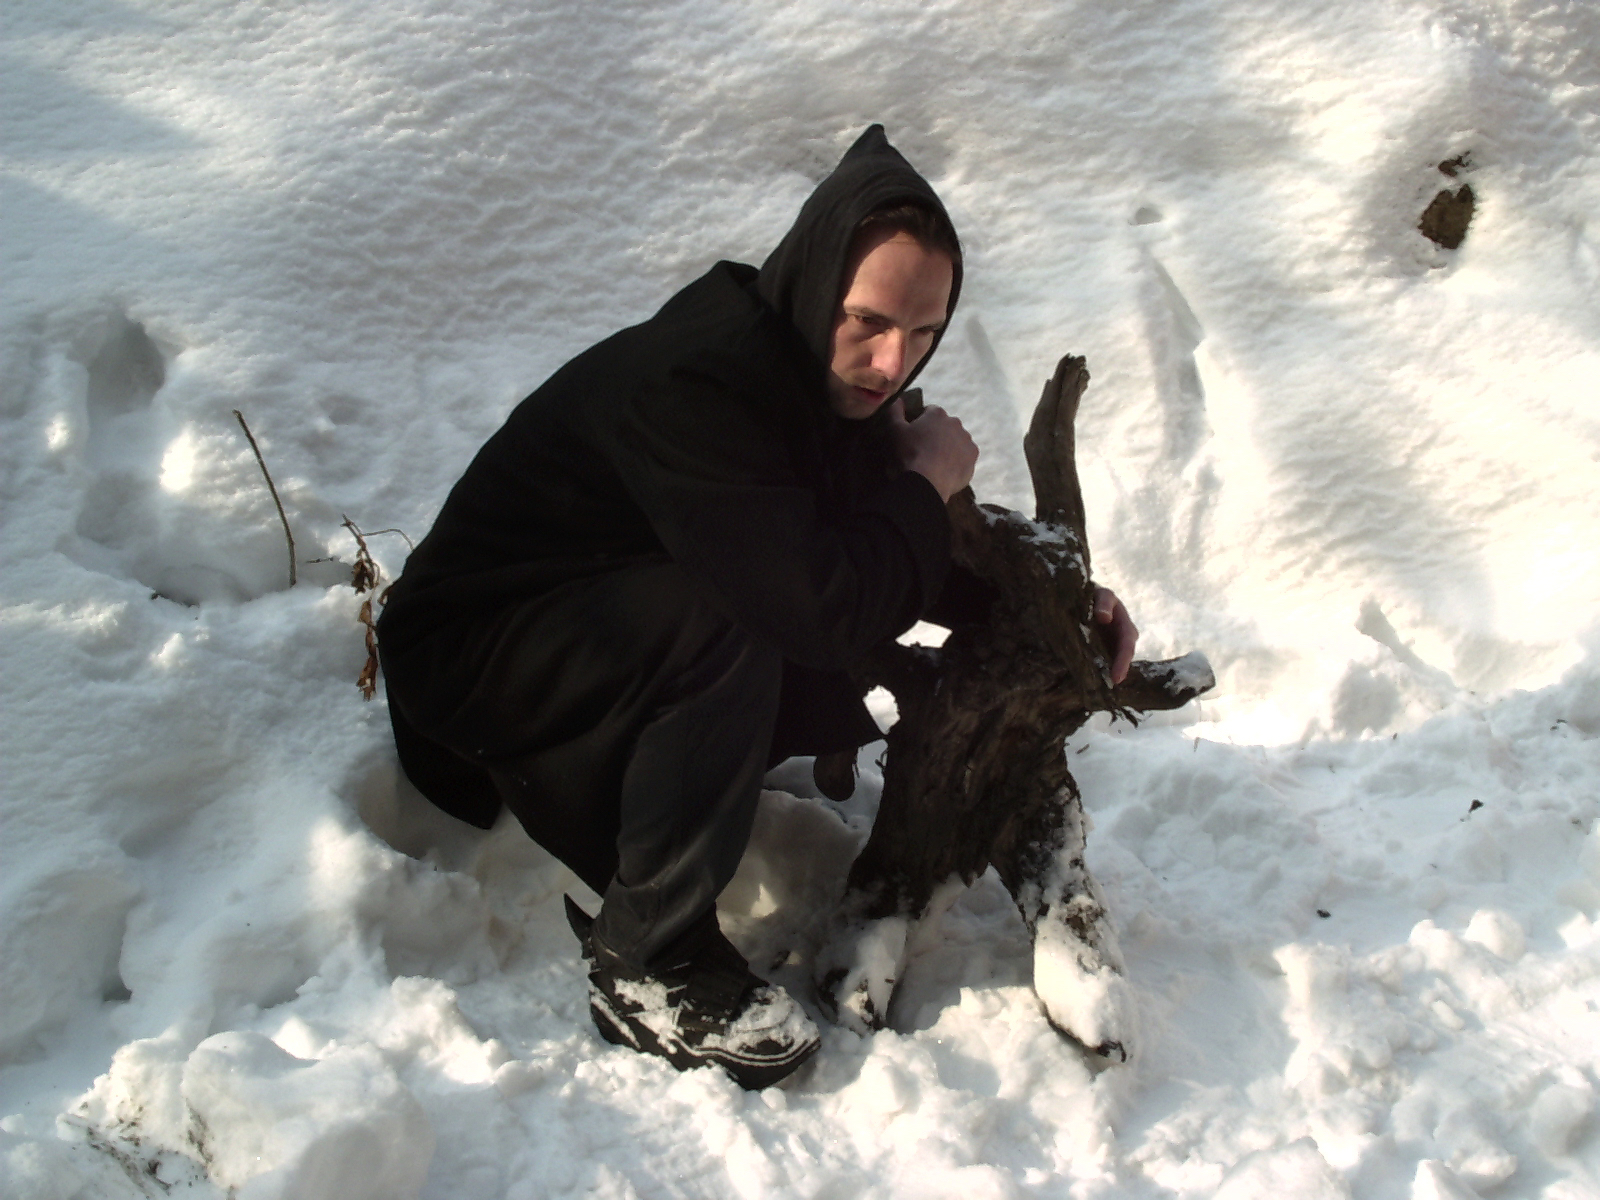 Attila Csihar original photo shoot for SUNN O))) "White2" album, 2003